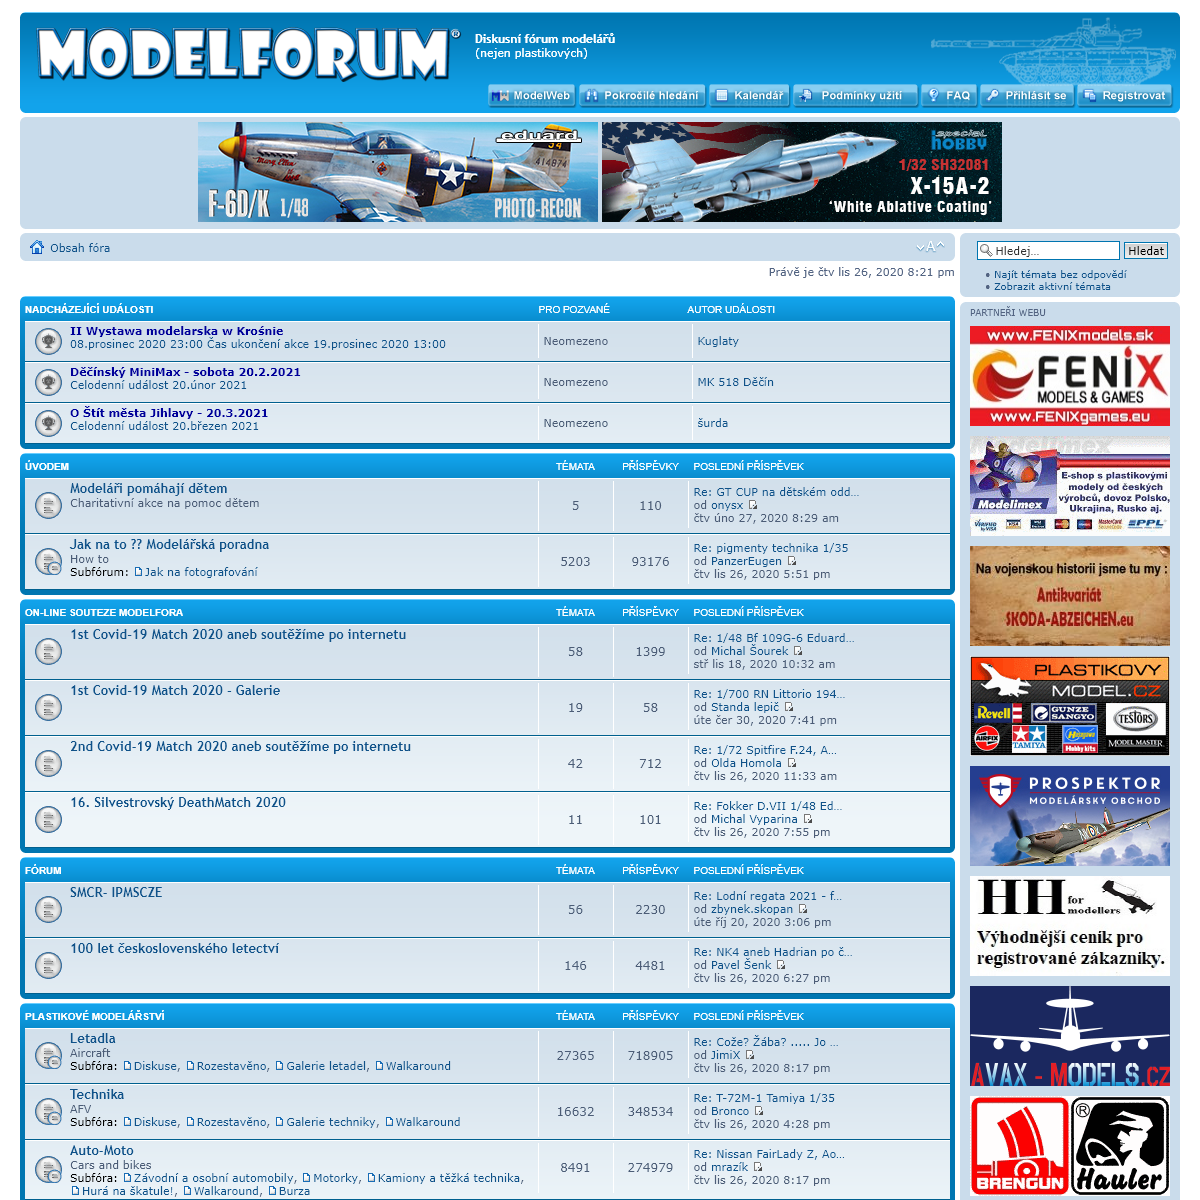 A complete backup of modelforum.cz